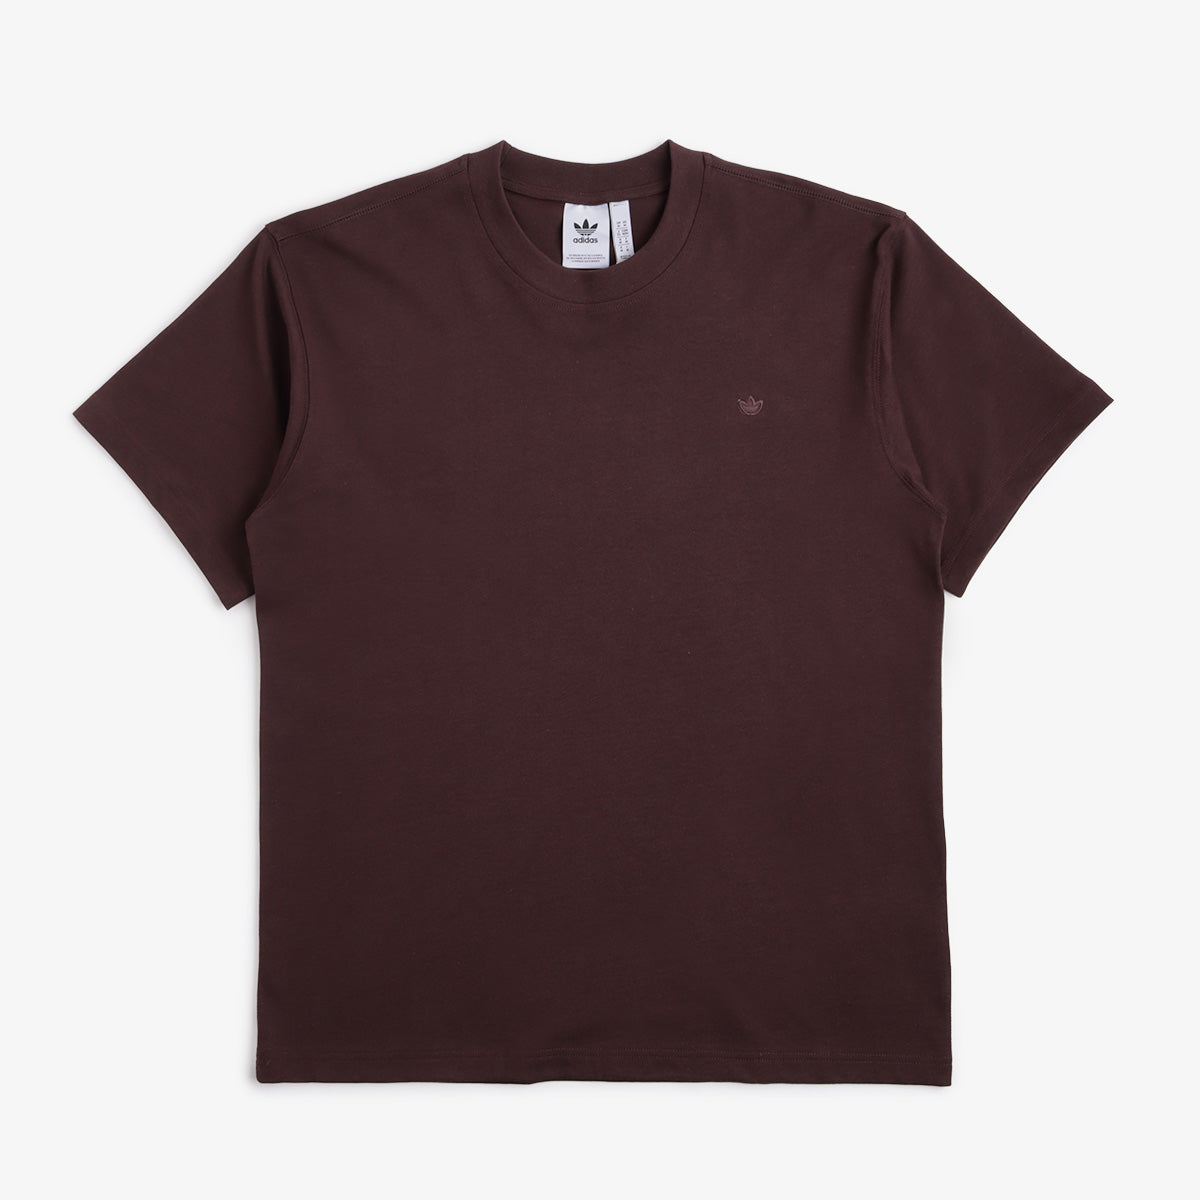 Contempo Industry Adidas Shadow T-Shirt – Brown Urban - Originals